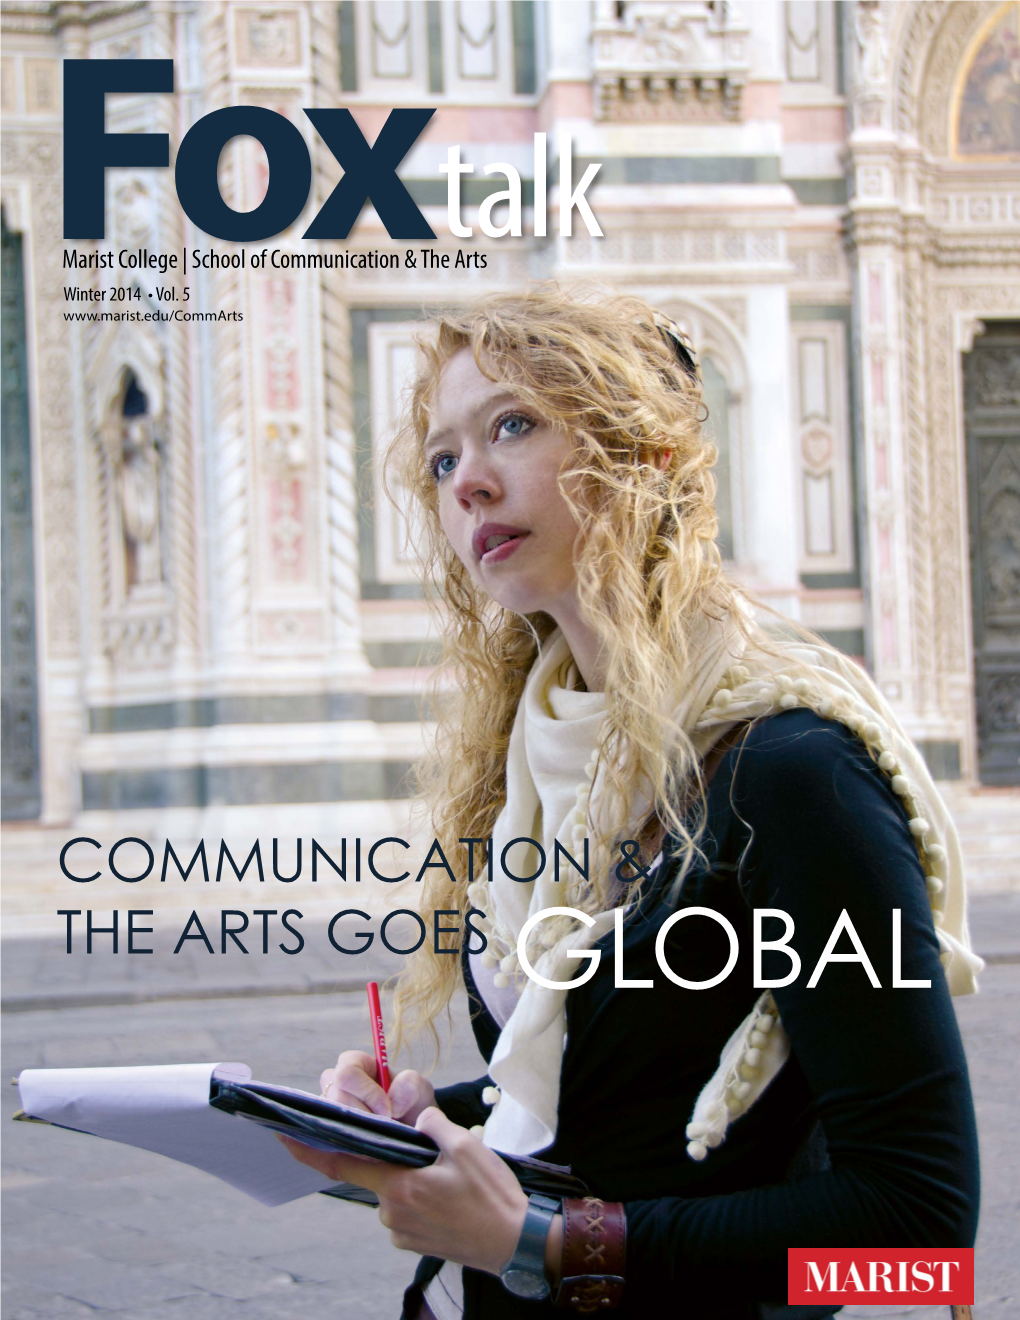 Communication & the Arts Goes Global